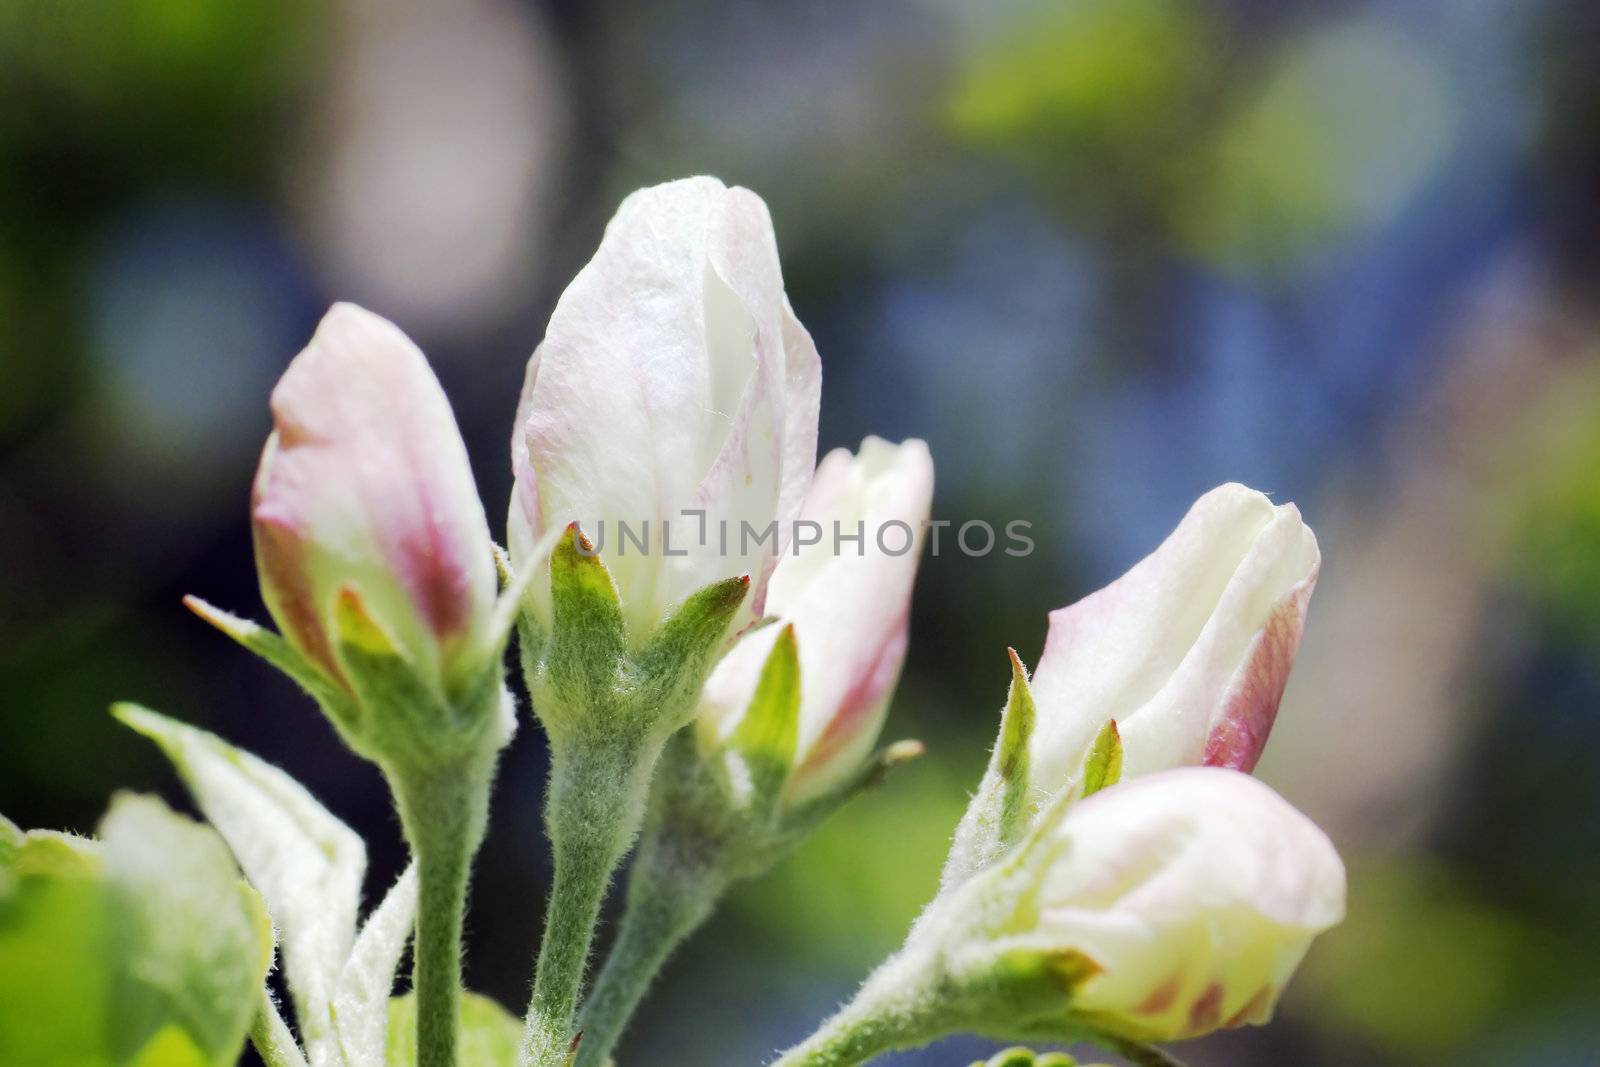 Apple tree flower buds by Mirage3